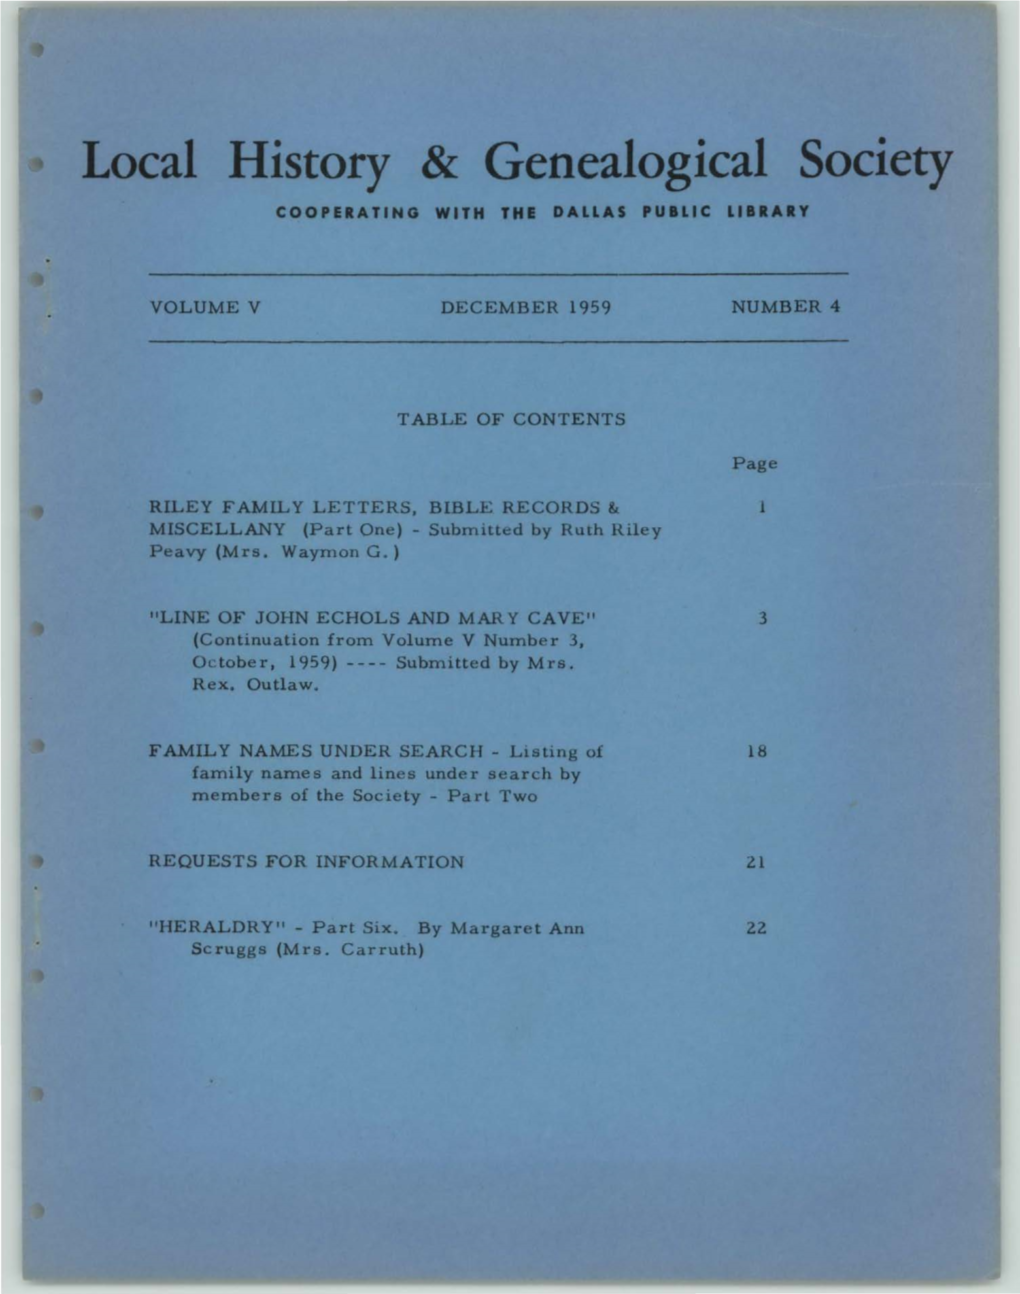 Local History & Genealogical Society